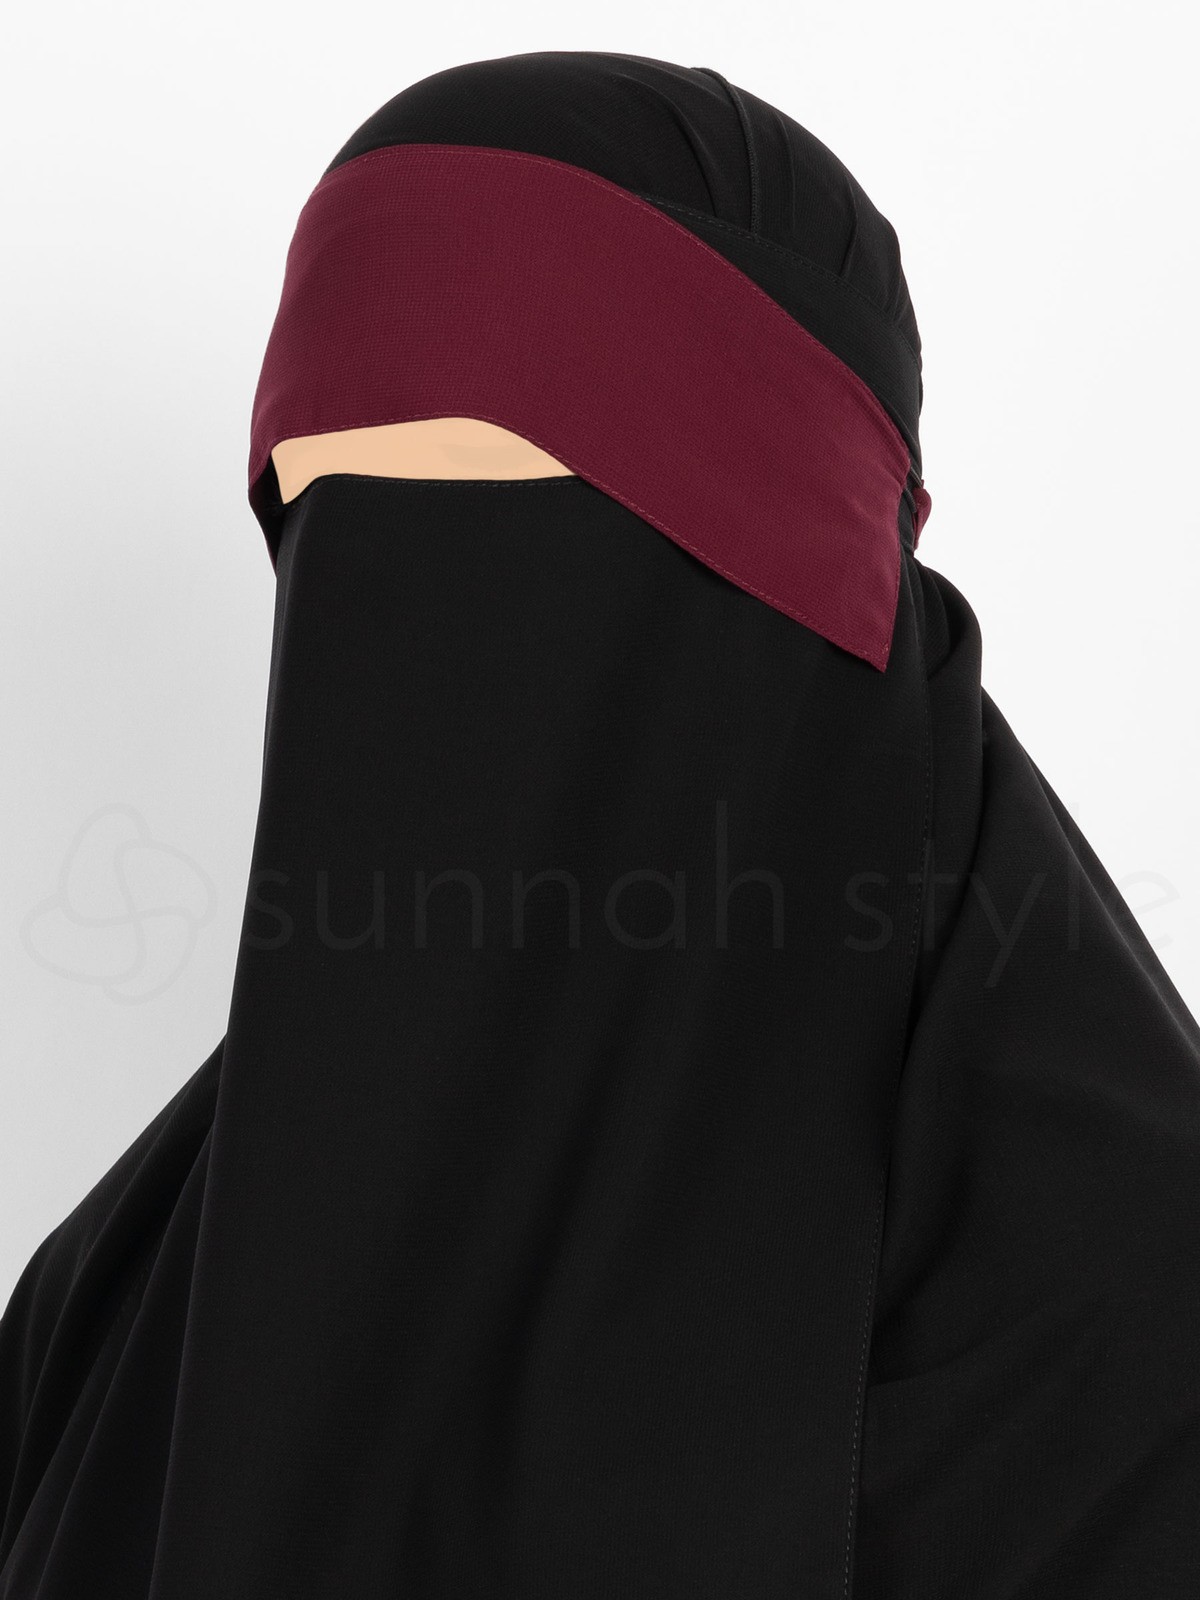 Sunnah Style - Adjustable Niqab Flap (Burgundy)